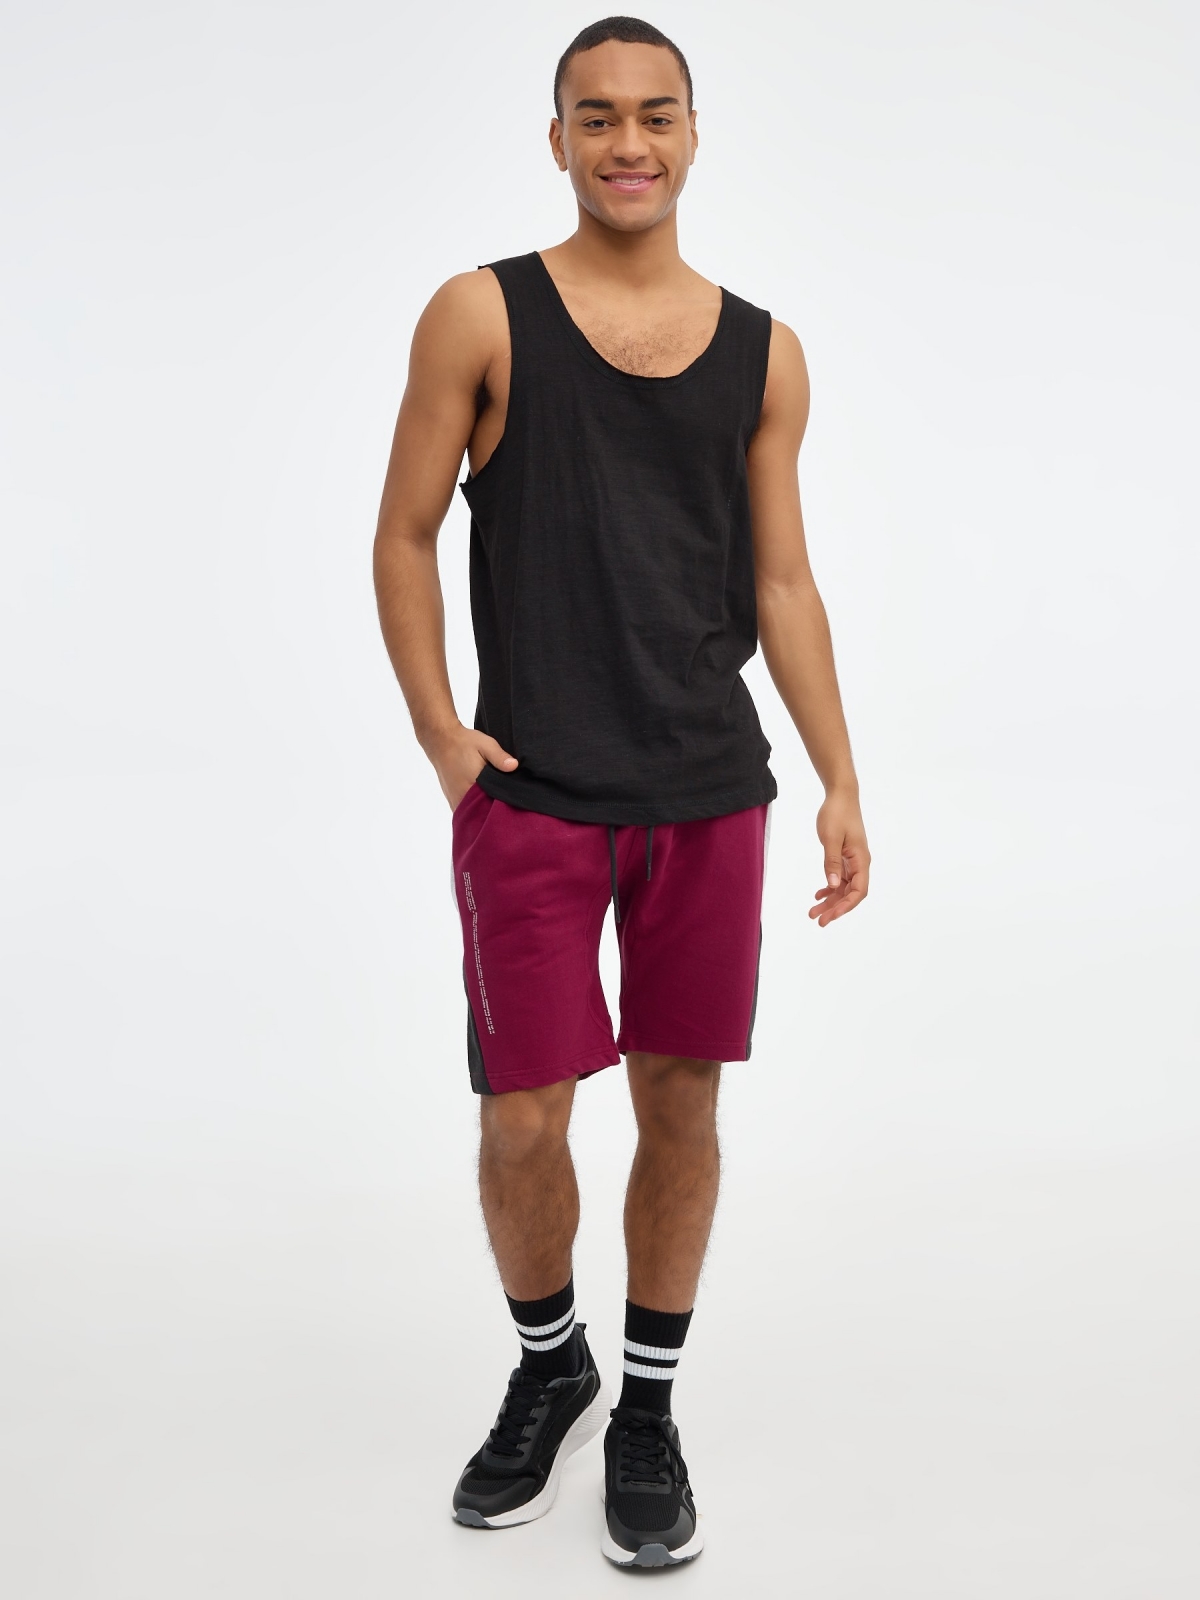 Bermuda jogger shorts maroon block color garnet front view